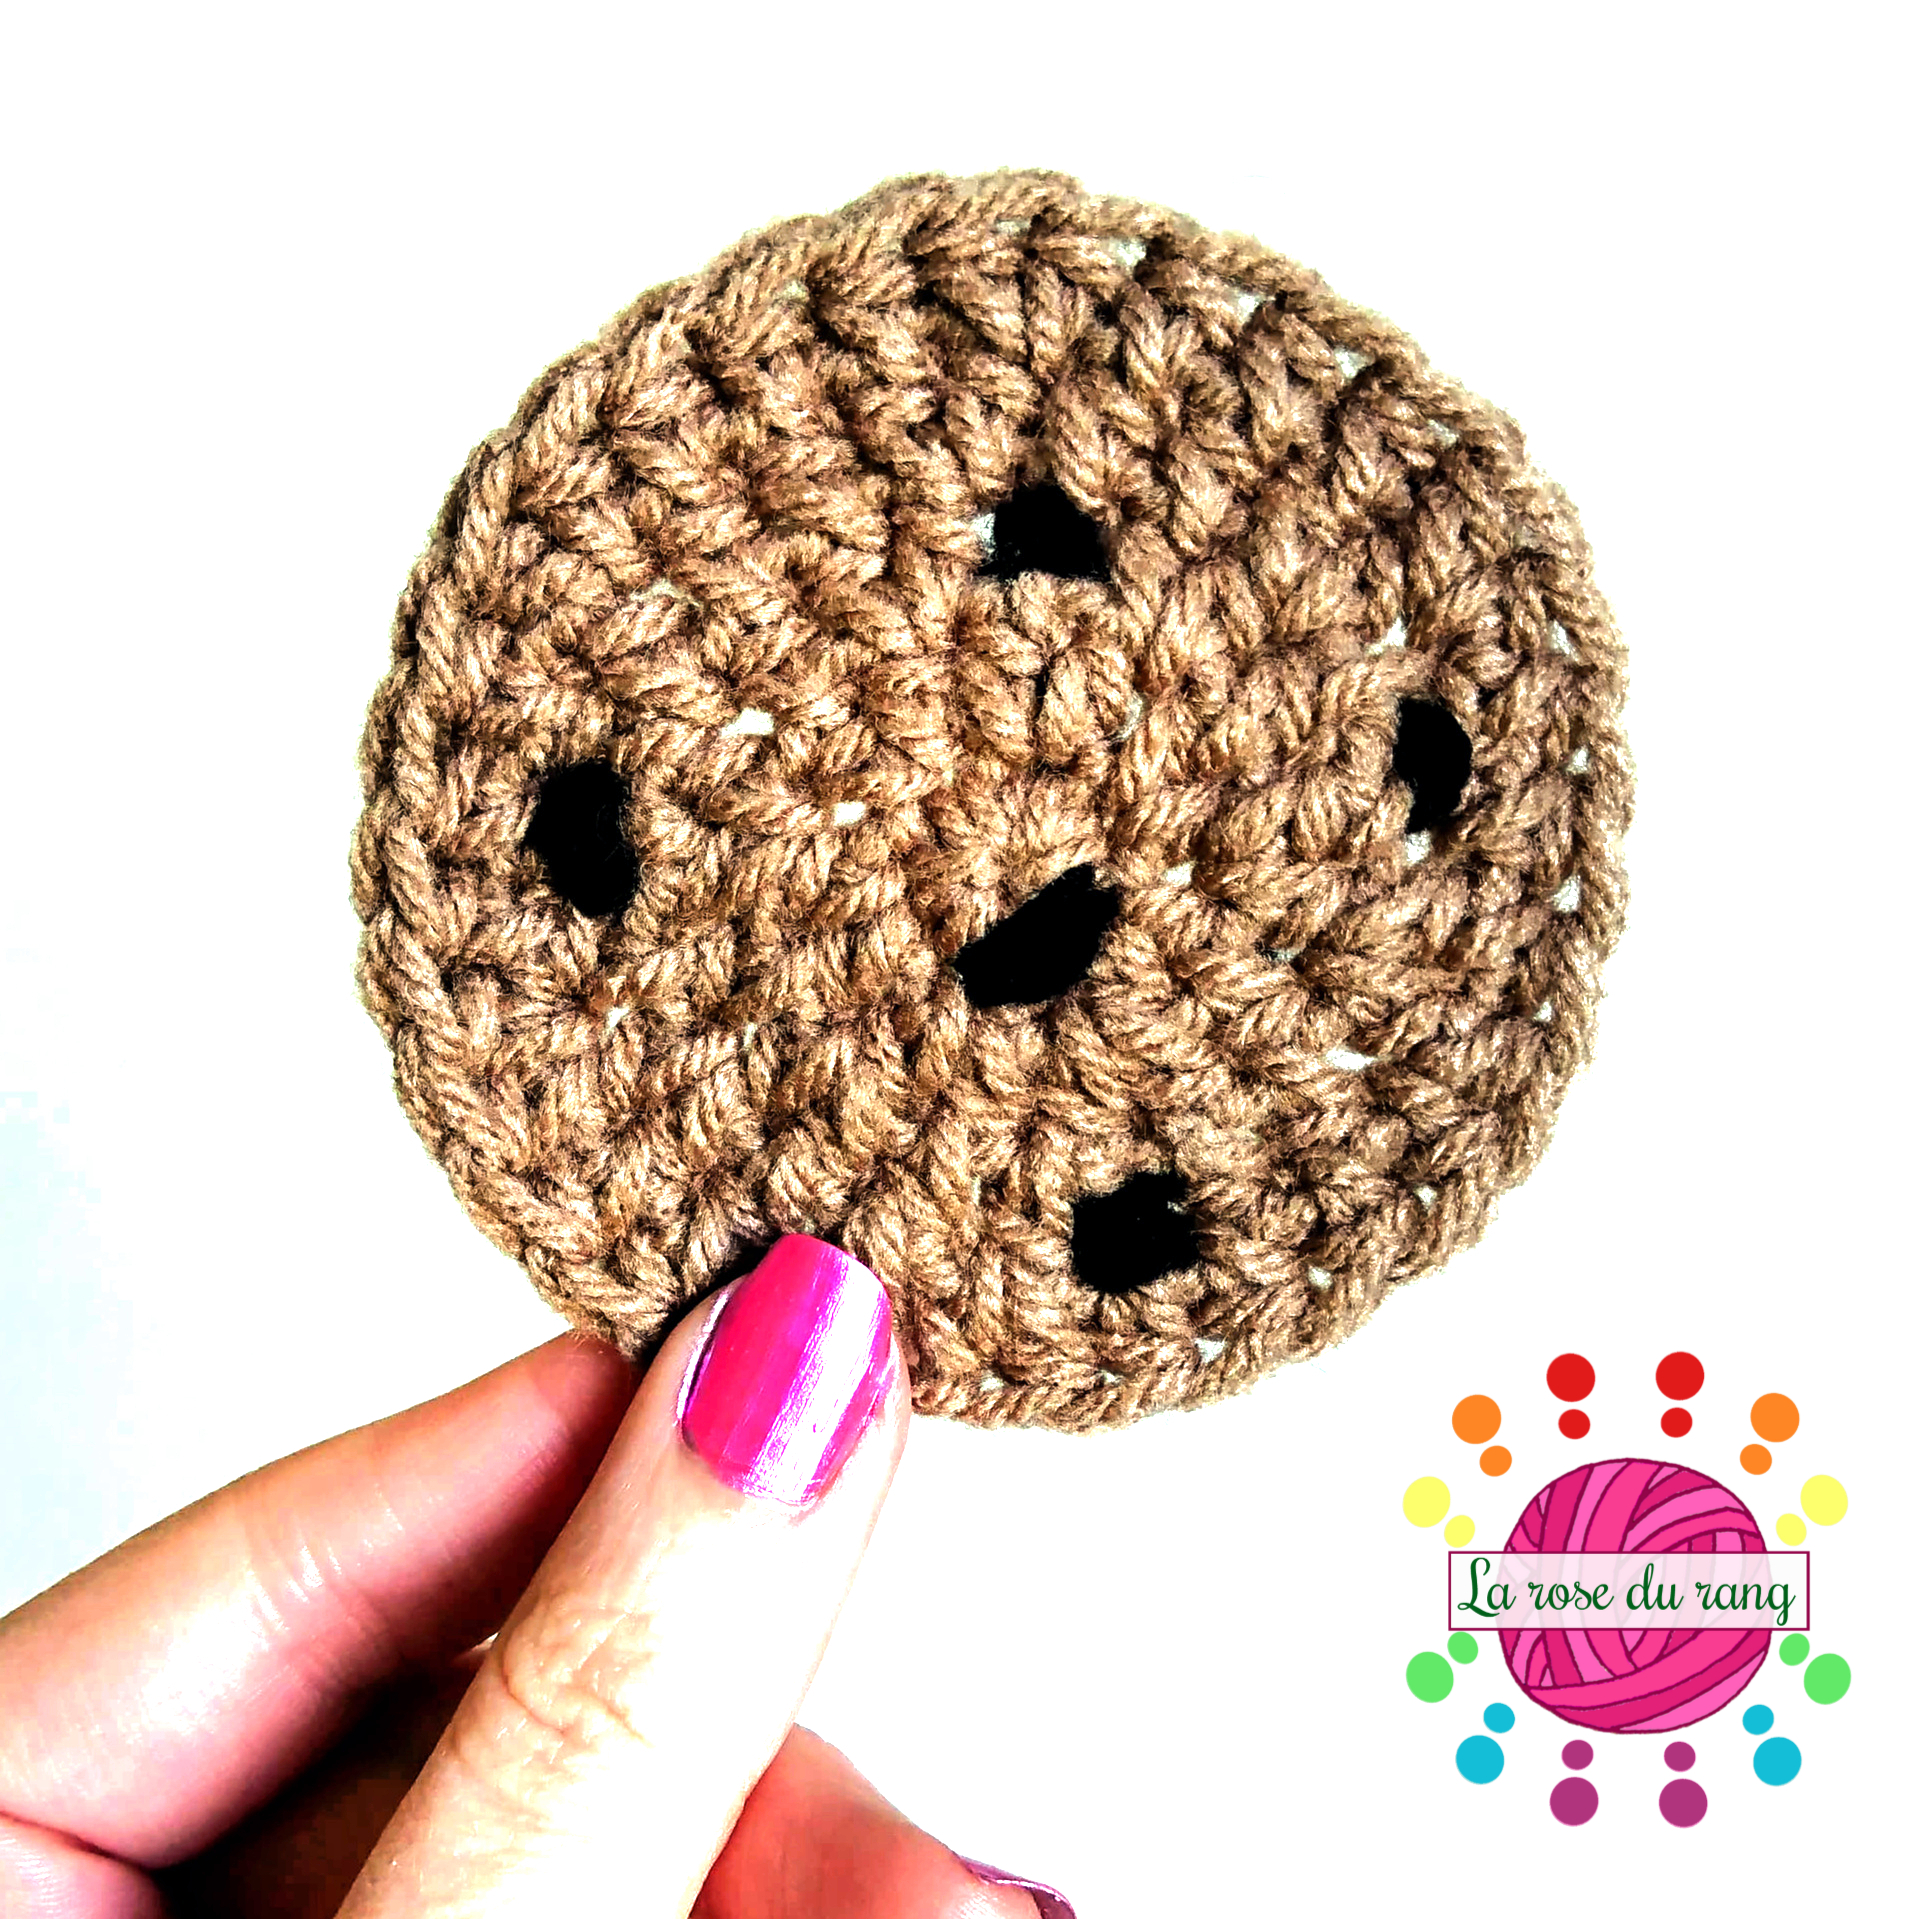 Free cookie coaster crochet pattern by La rose du rang